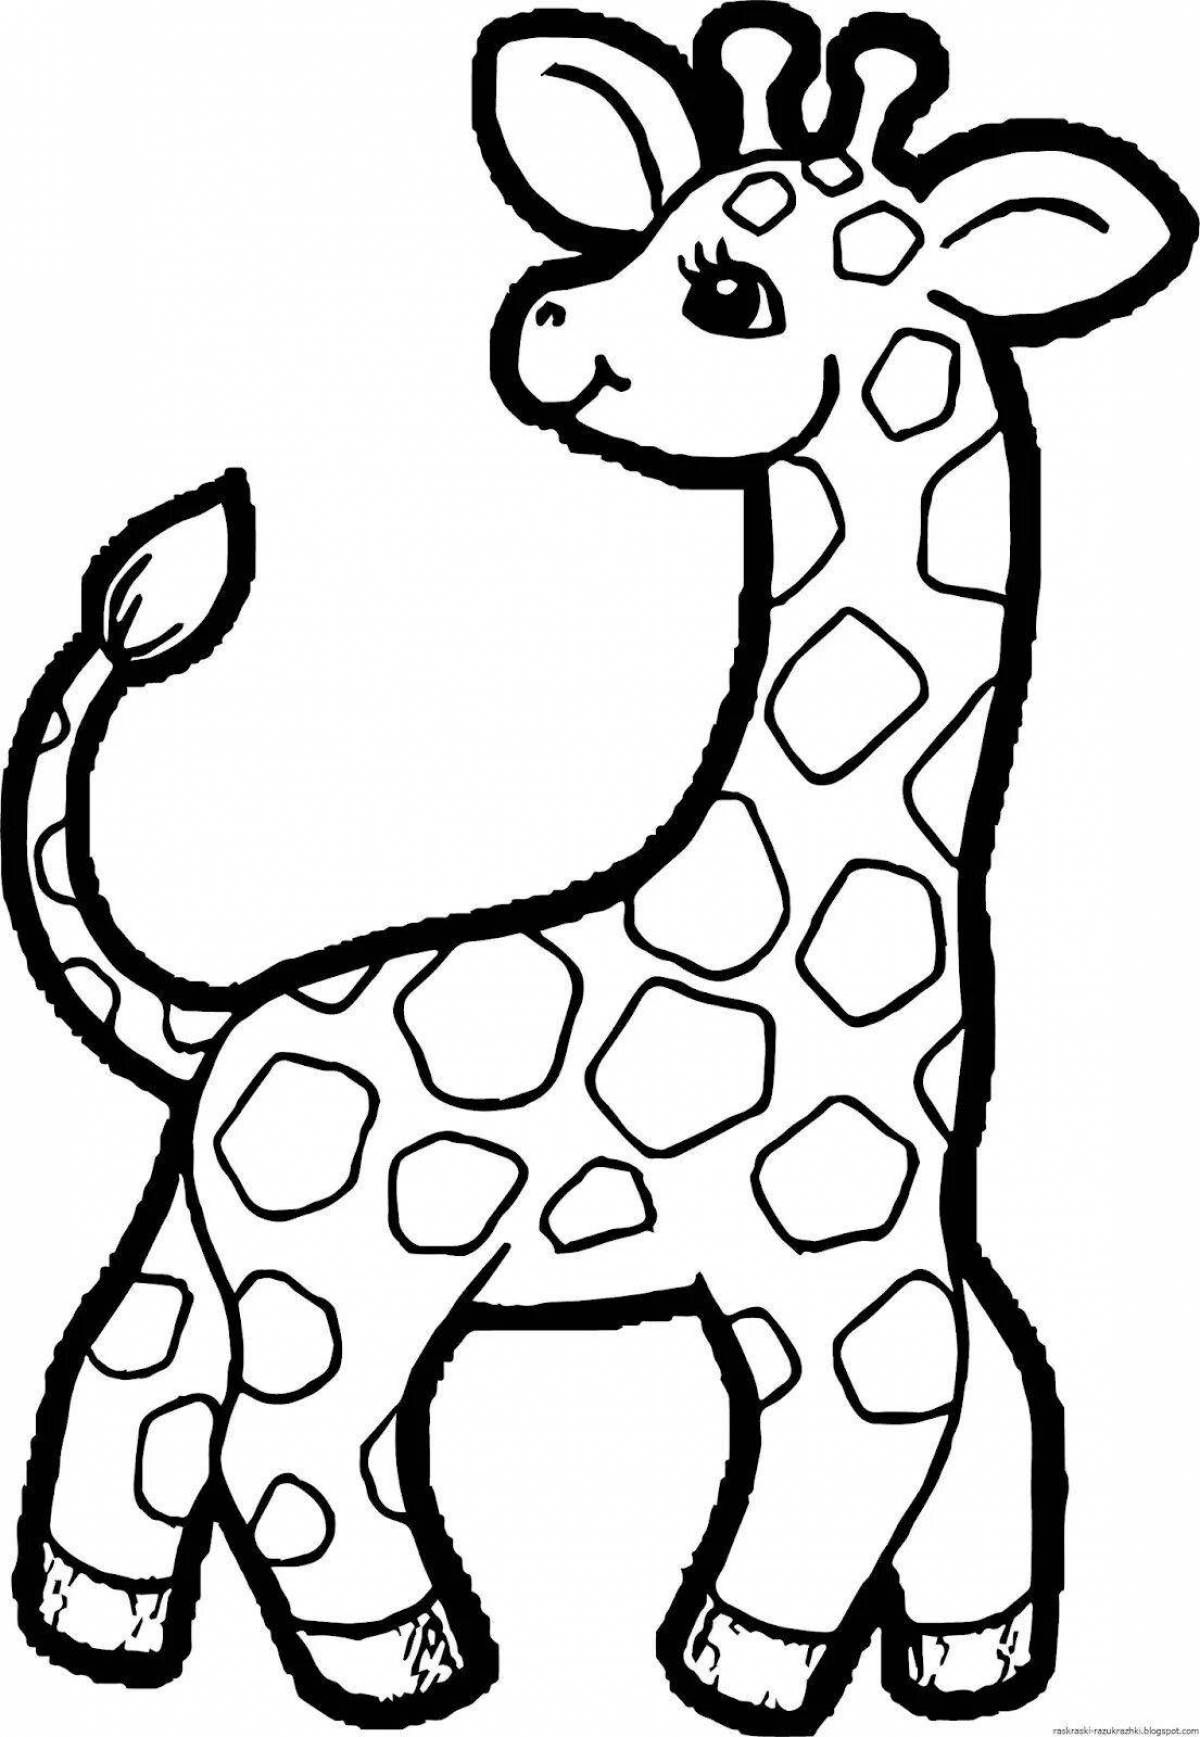 Creative animal drawing for kids